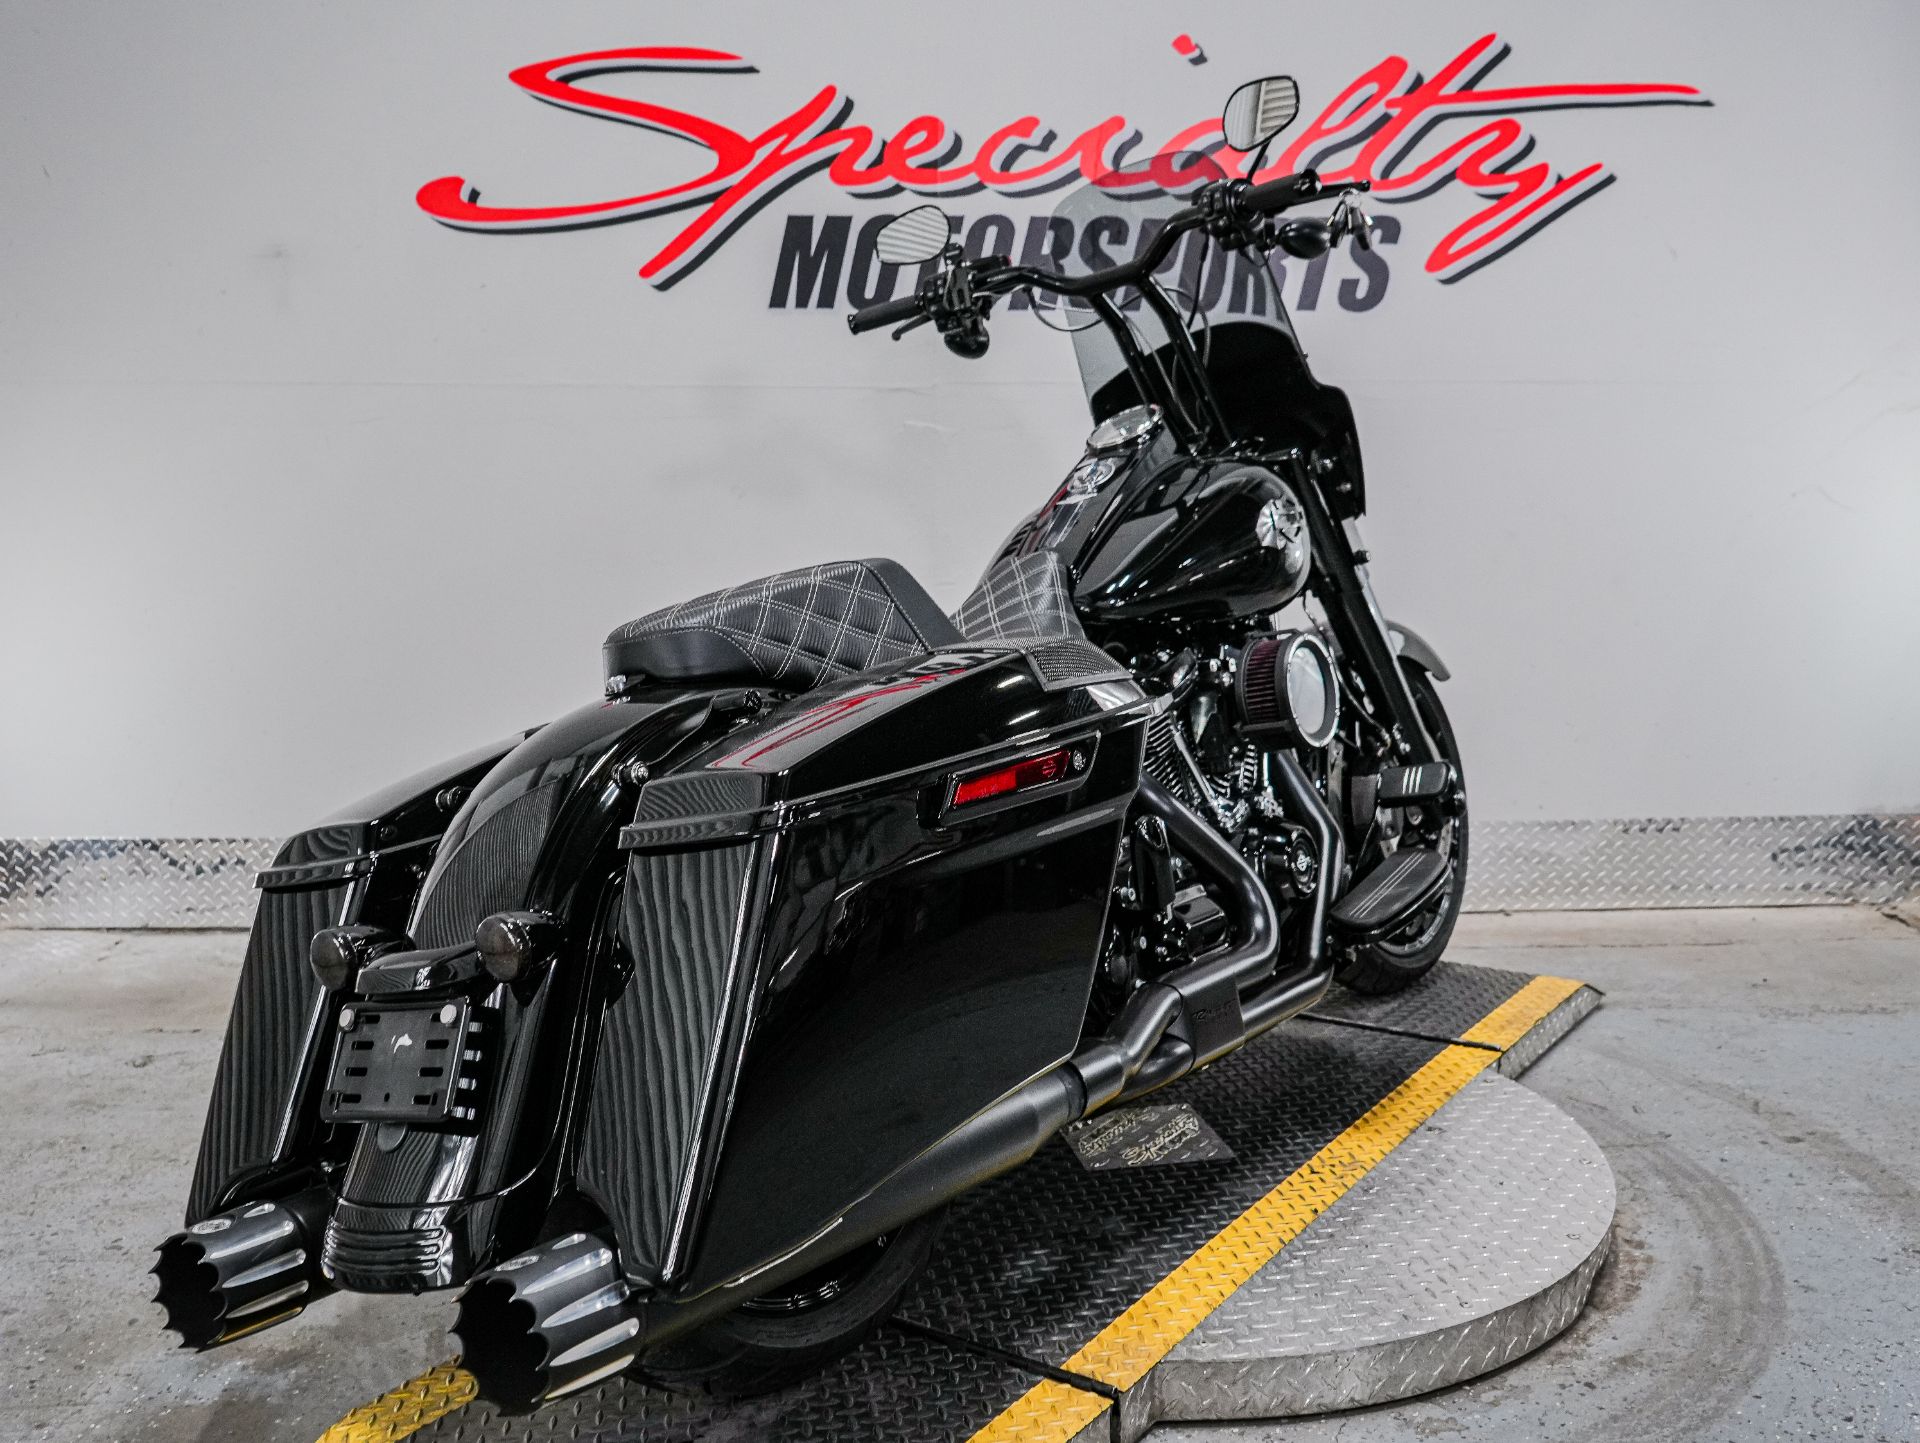 2018 Harley-Davidson Road King® Special in Sacramento, California - Photo 2